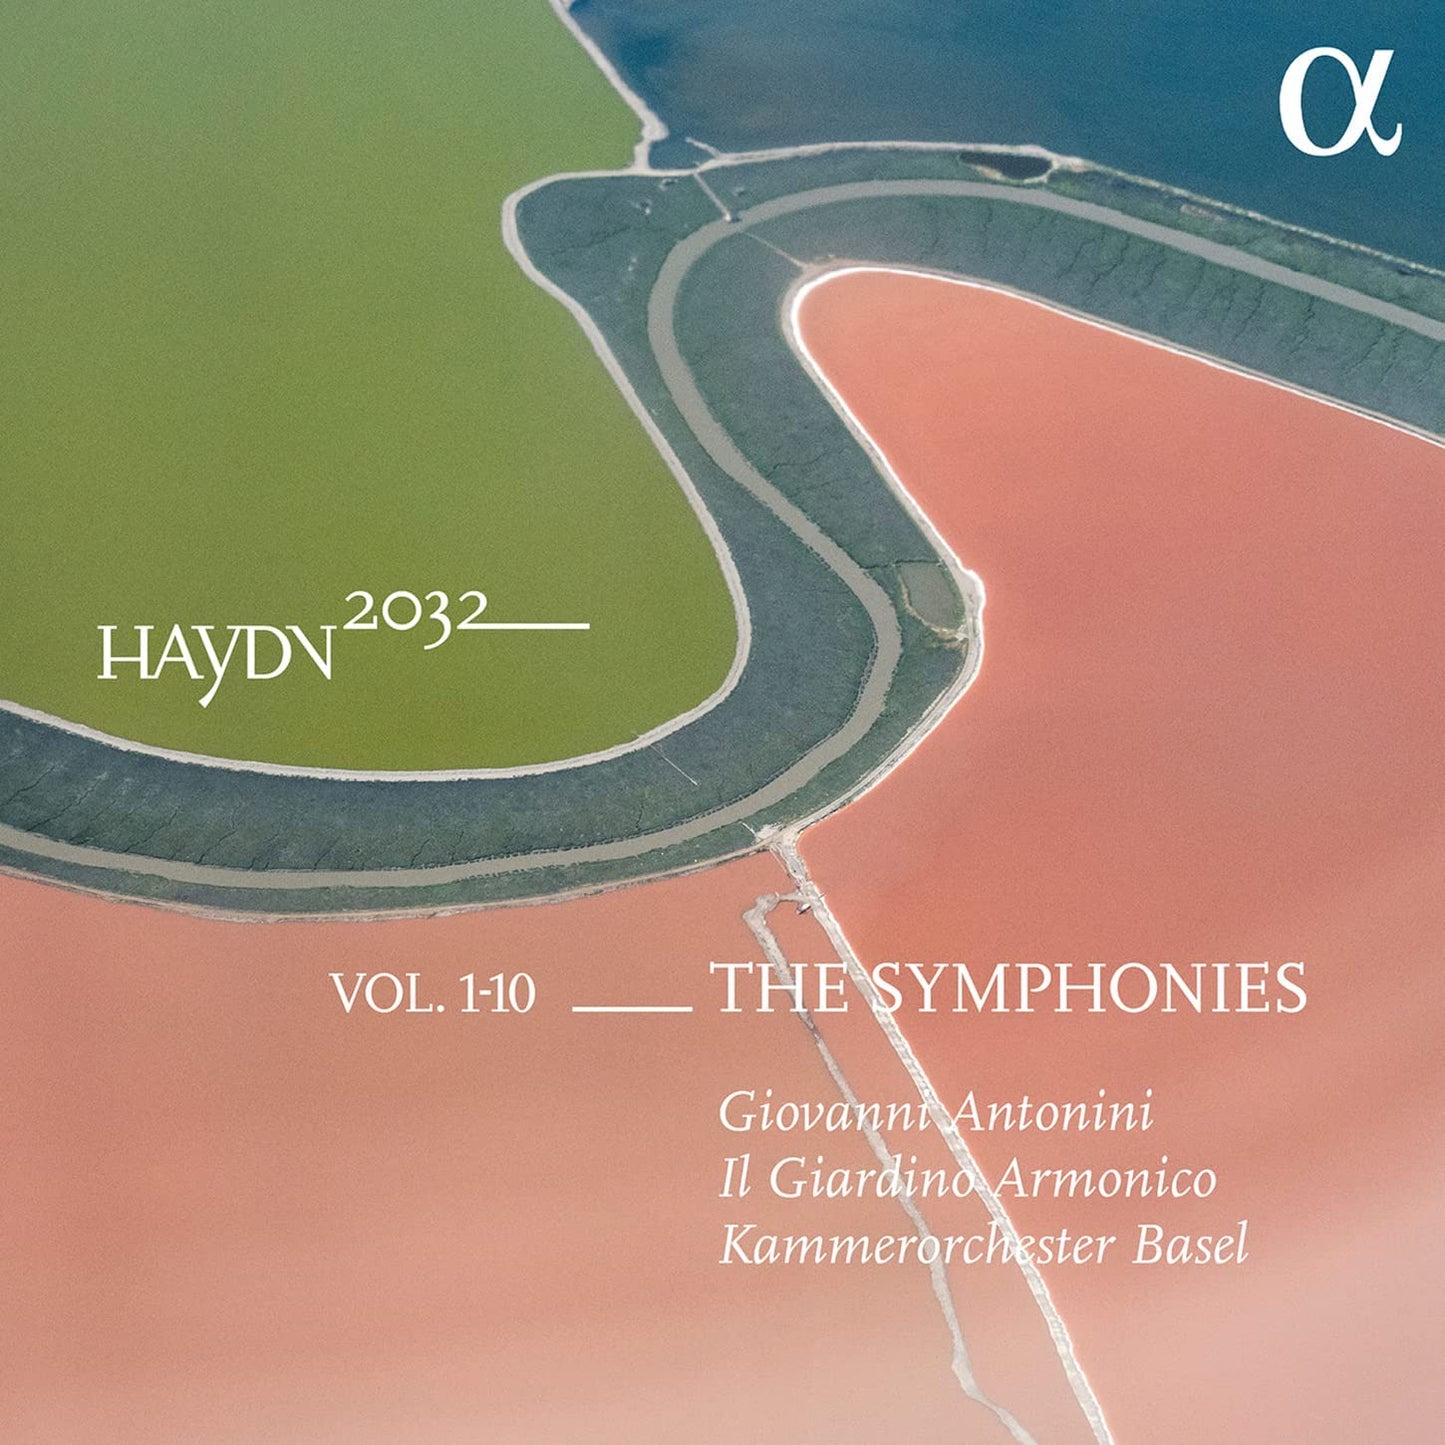 Giovanni Antonini/Kammerorchester Basel - Haydn Vol. 1-10 The Symphonies - 10 CD